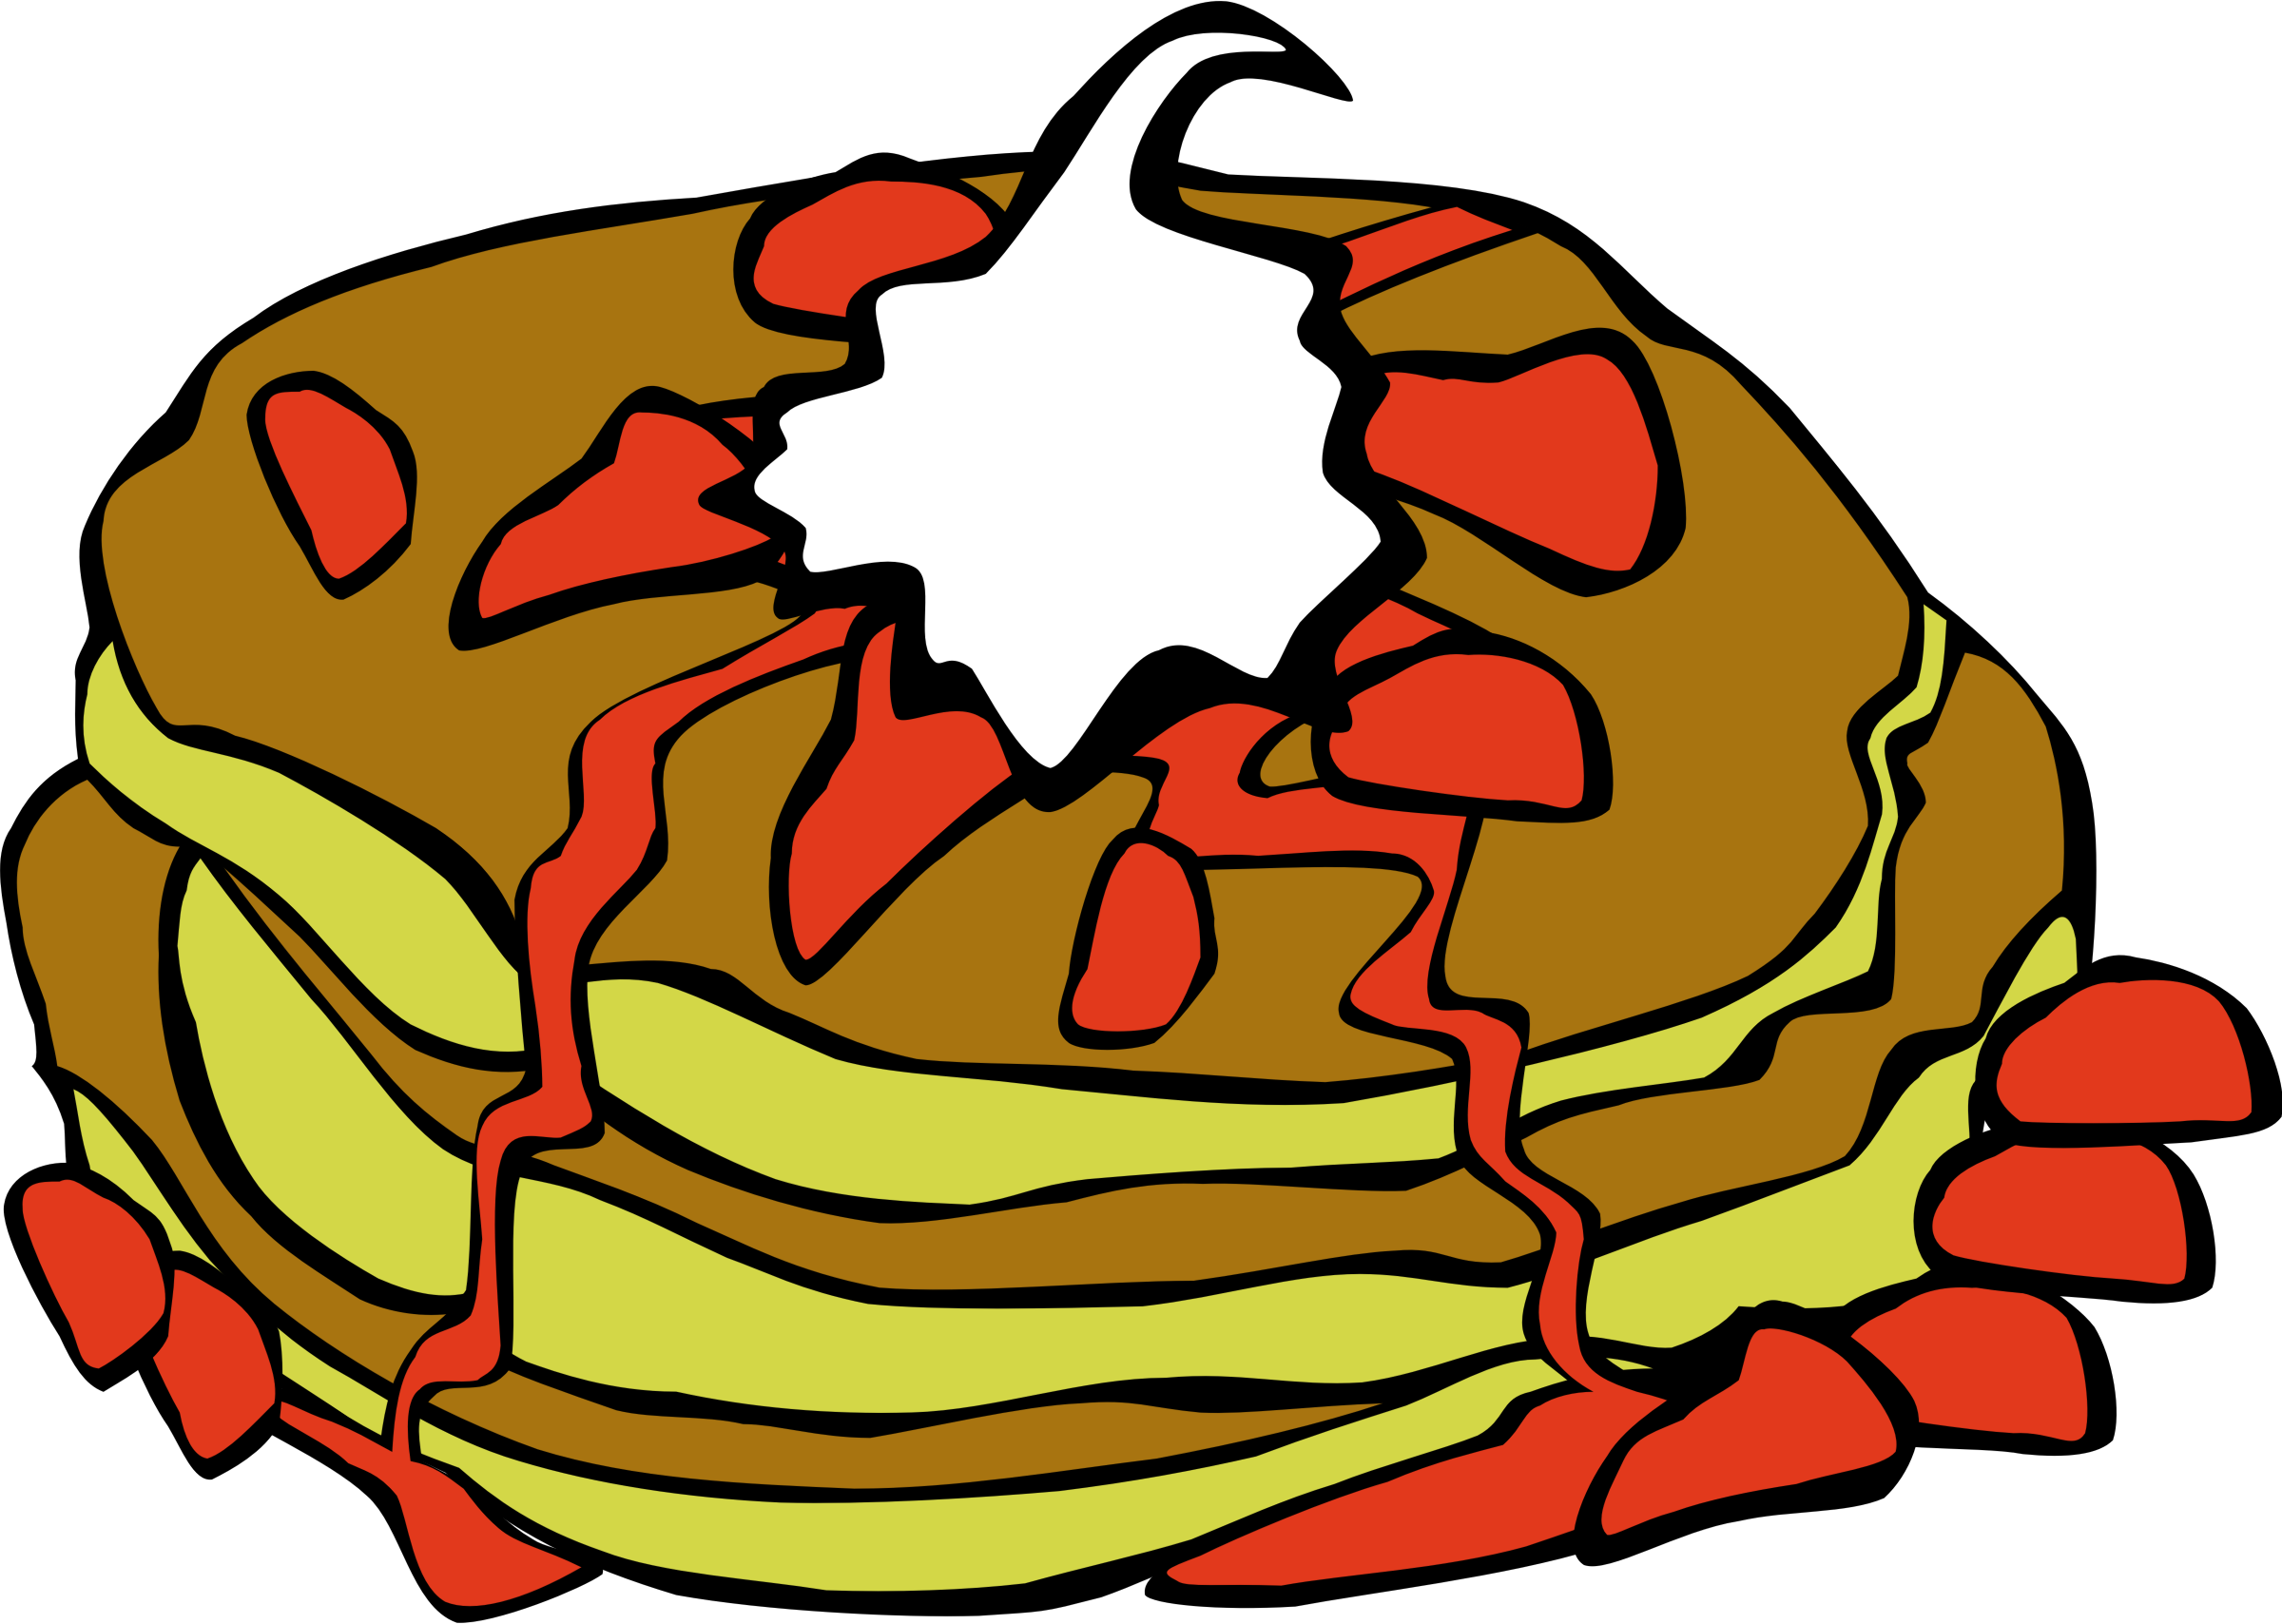 Fast food breakfast pancakes. Clipart book menu